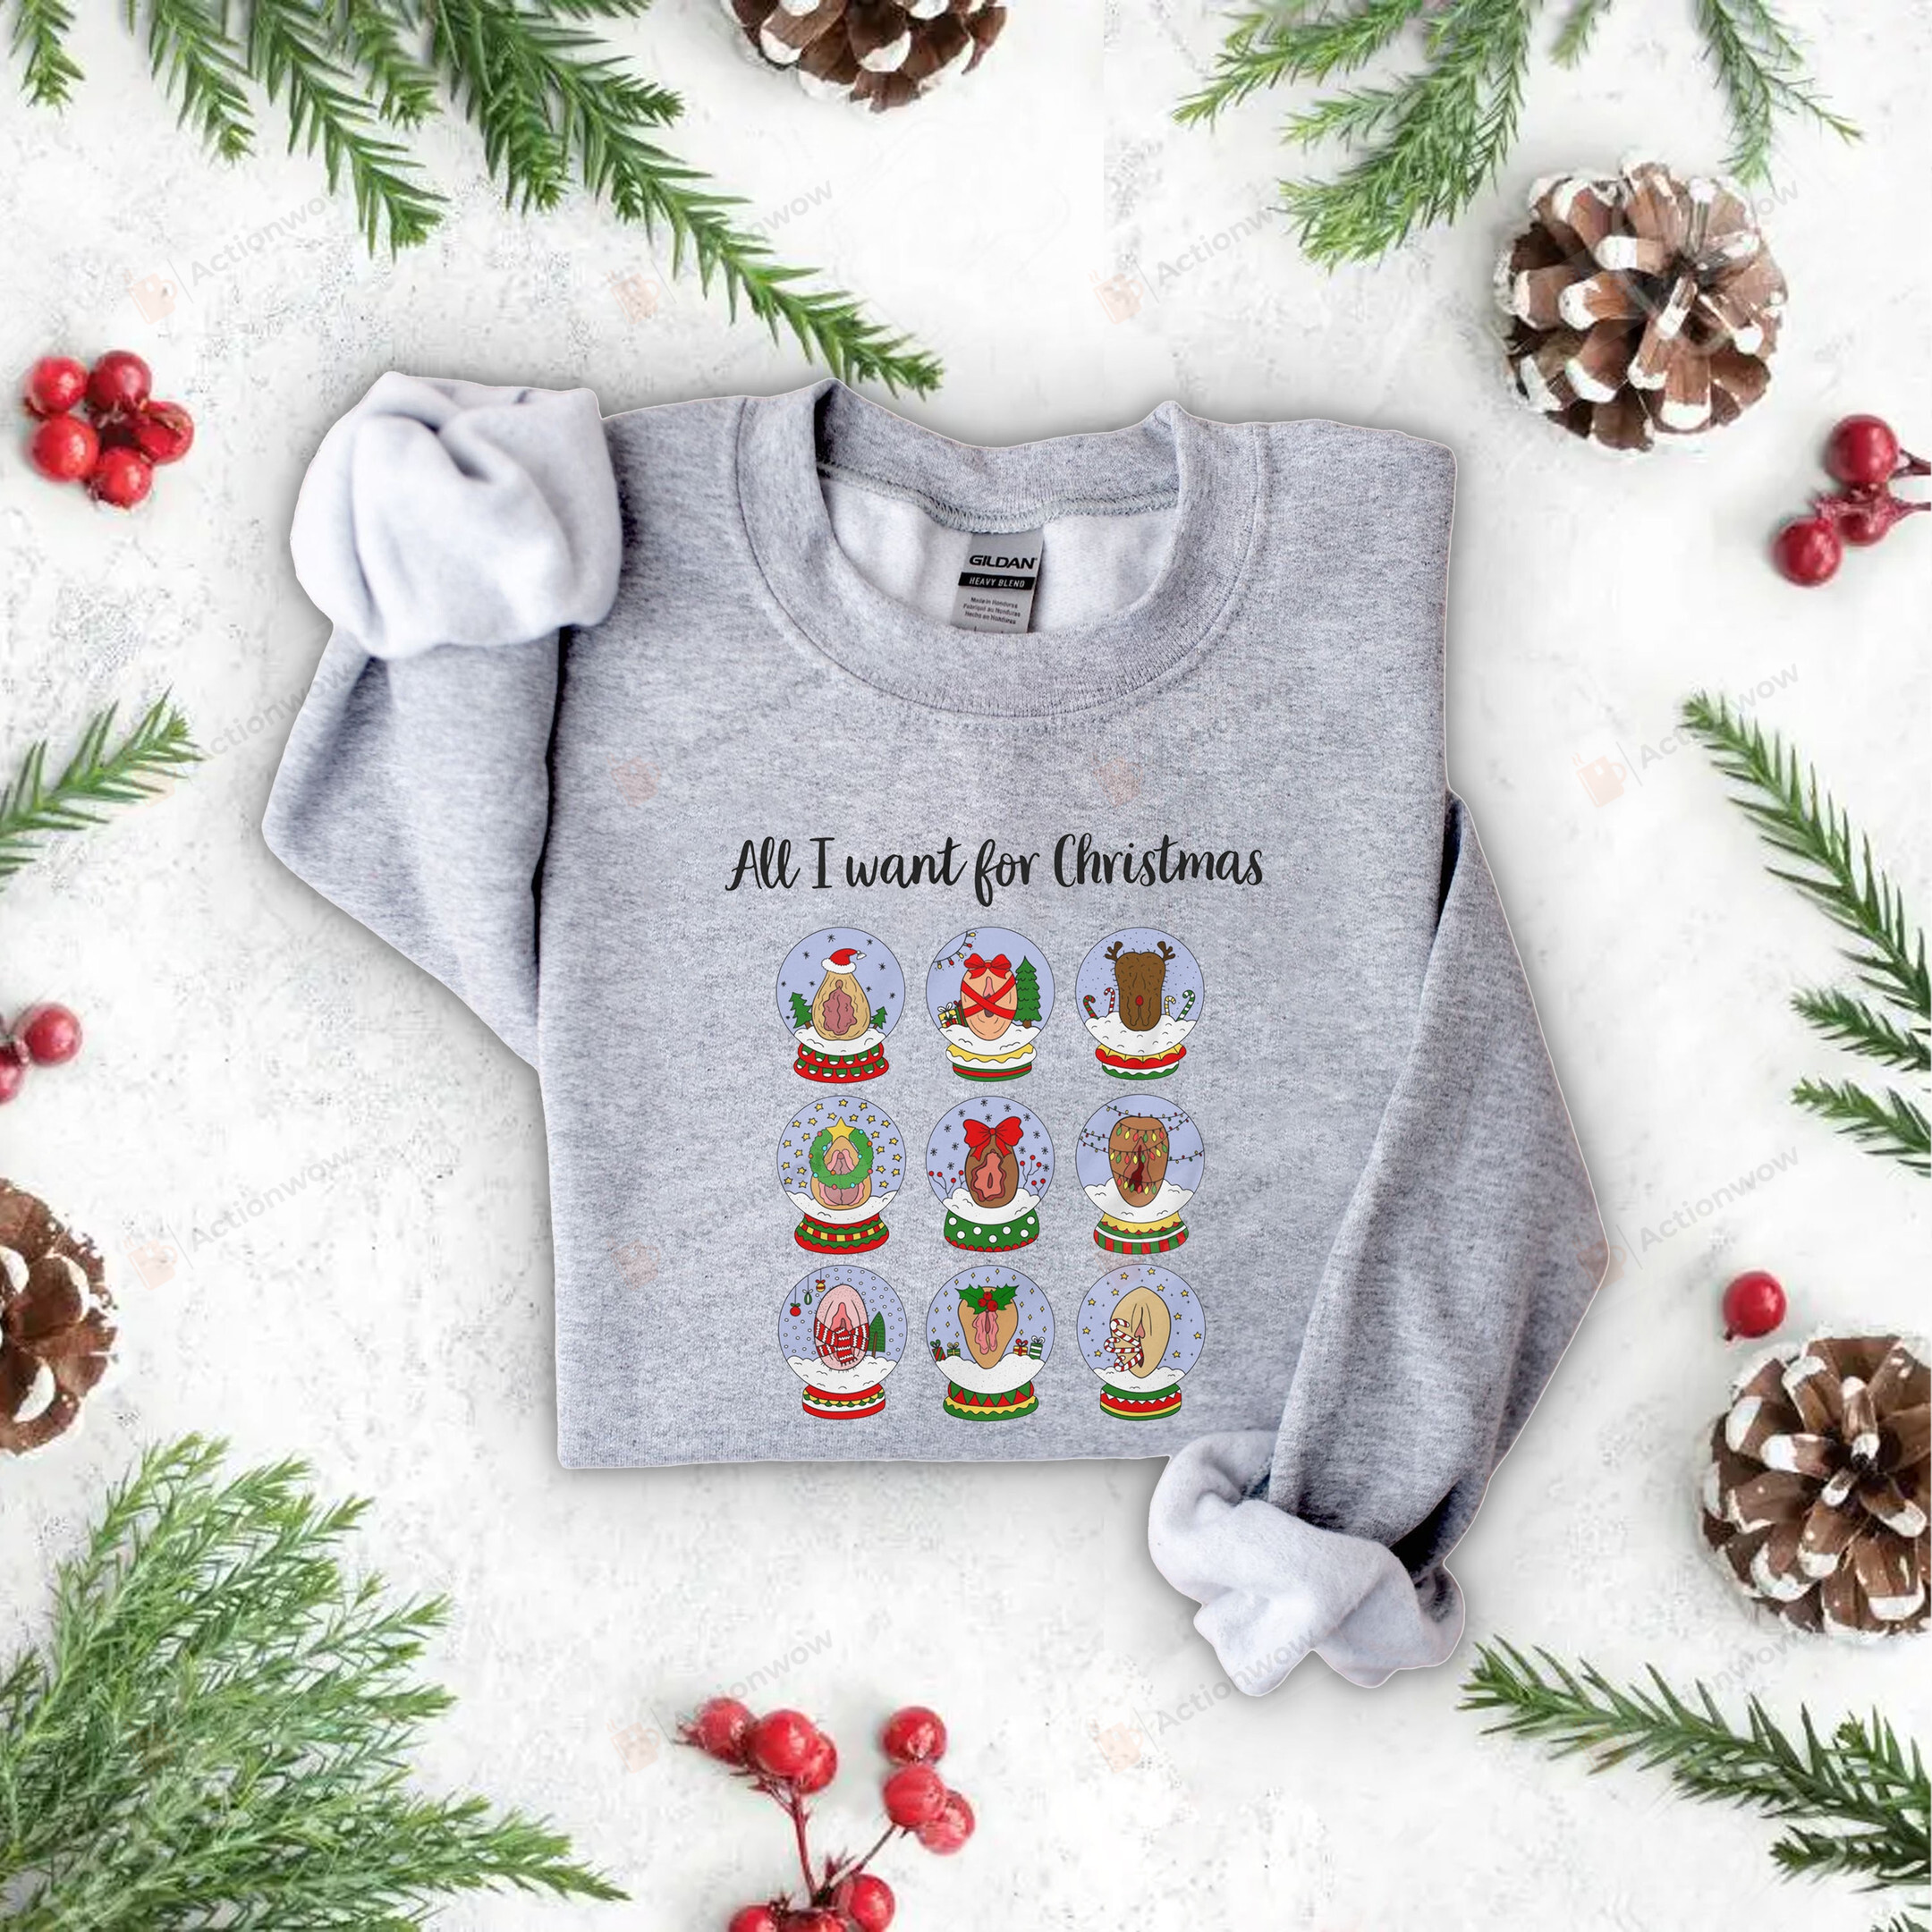 All I Want For Christmas Funny Dirty Sweatshirt, Vagina Vulva Christmas Tree Naughty Sweatshirts